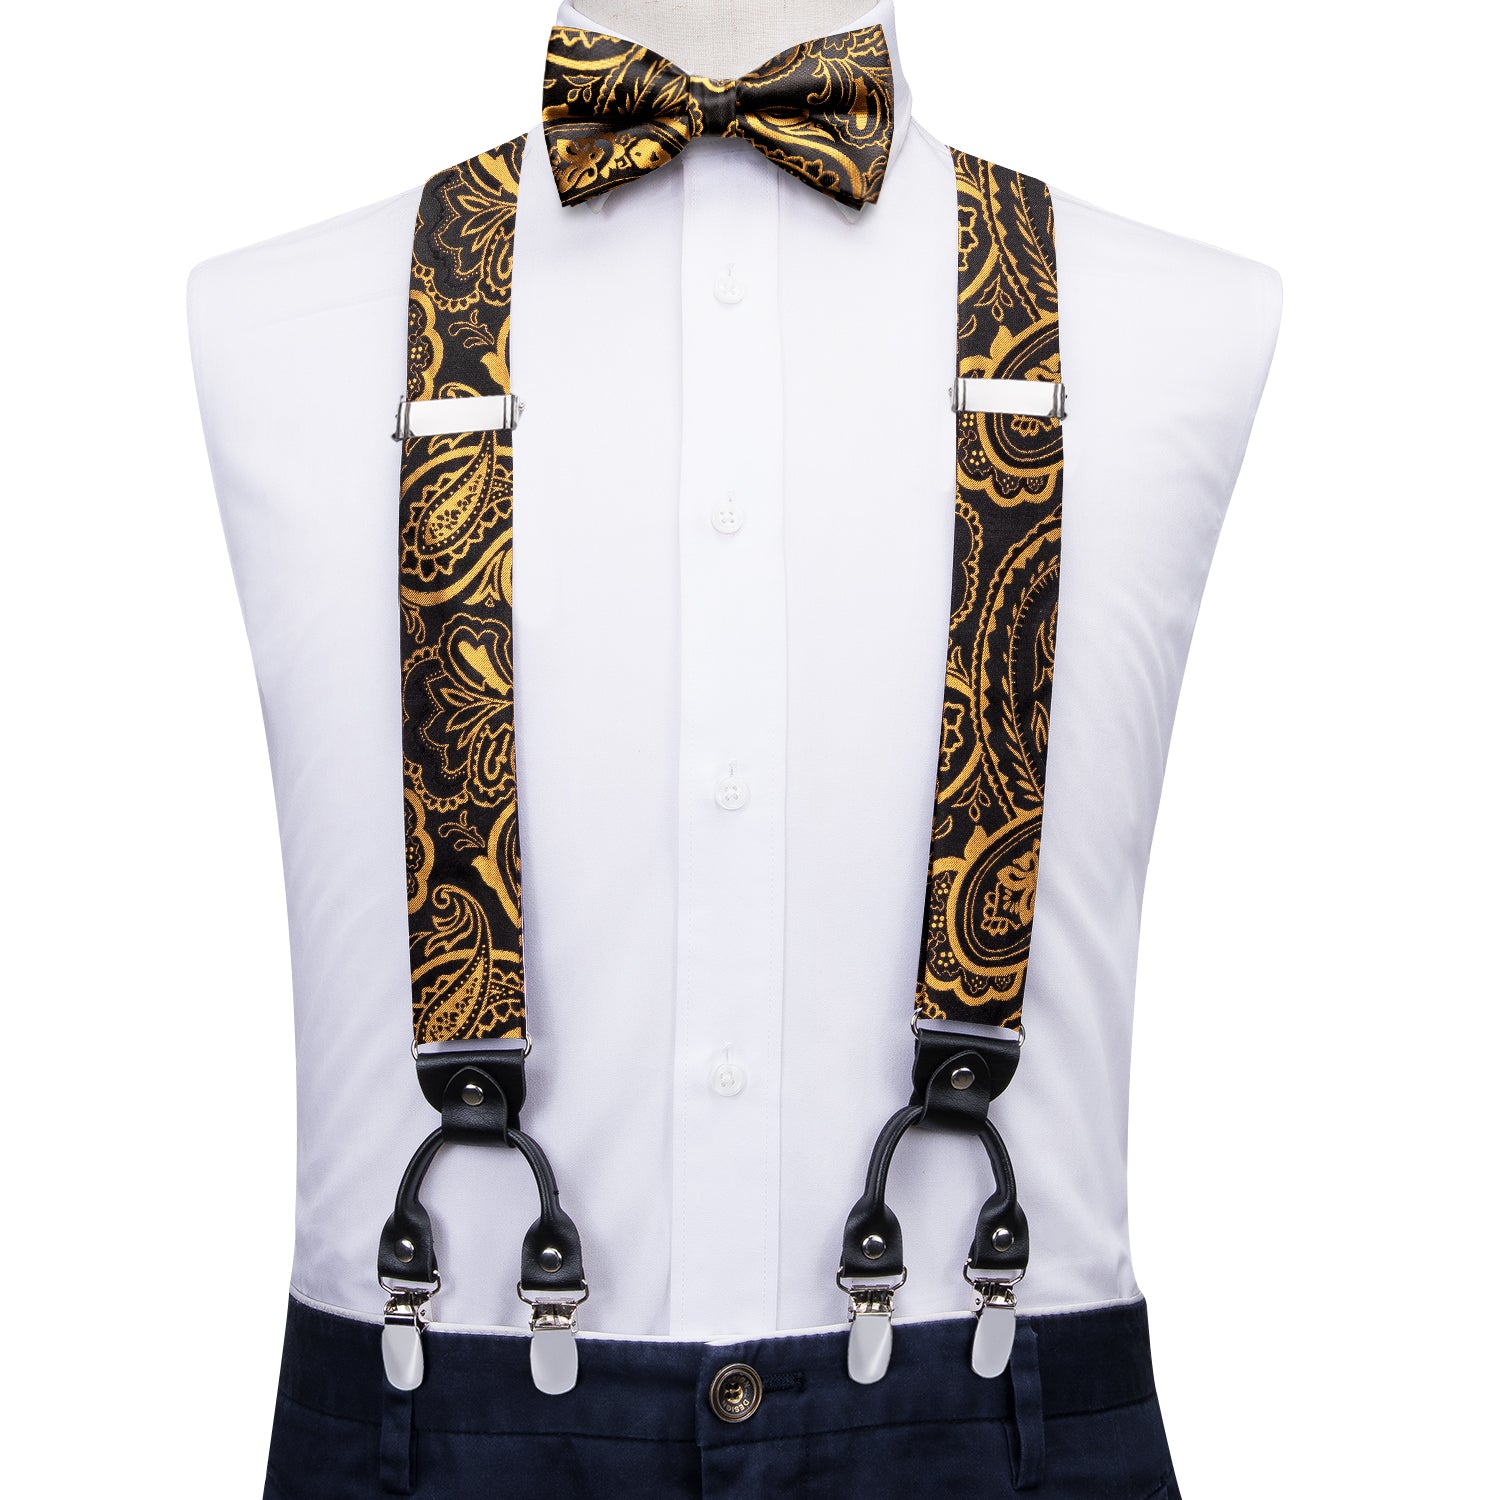 Black Golden Paisley Suspender Bowtie Pocket Square Cufflinks Set